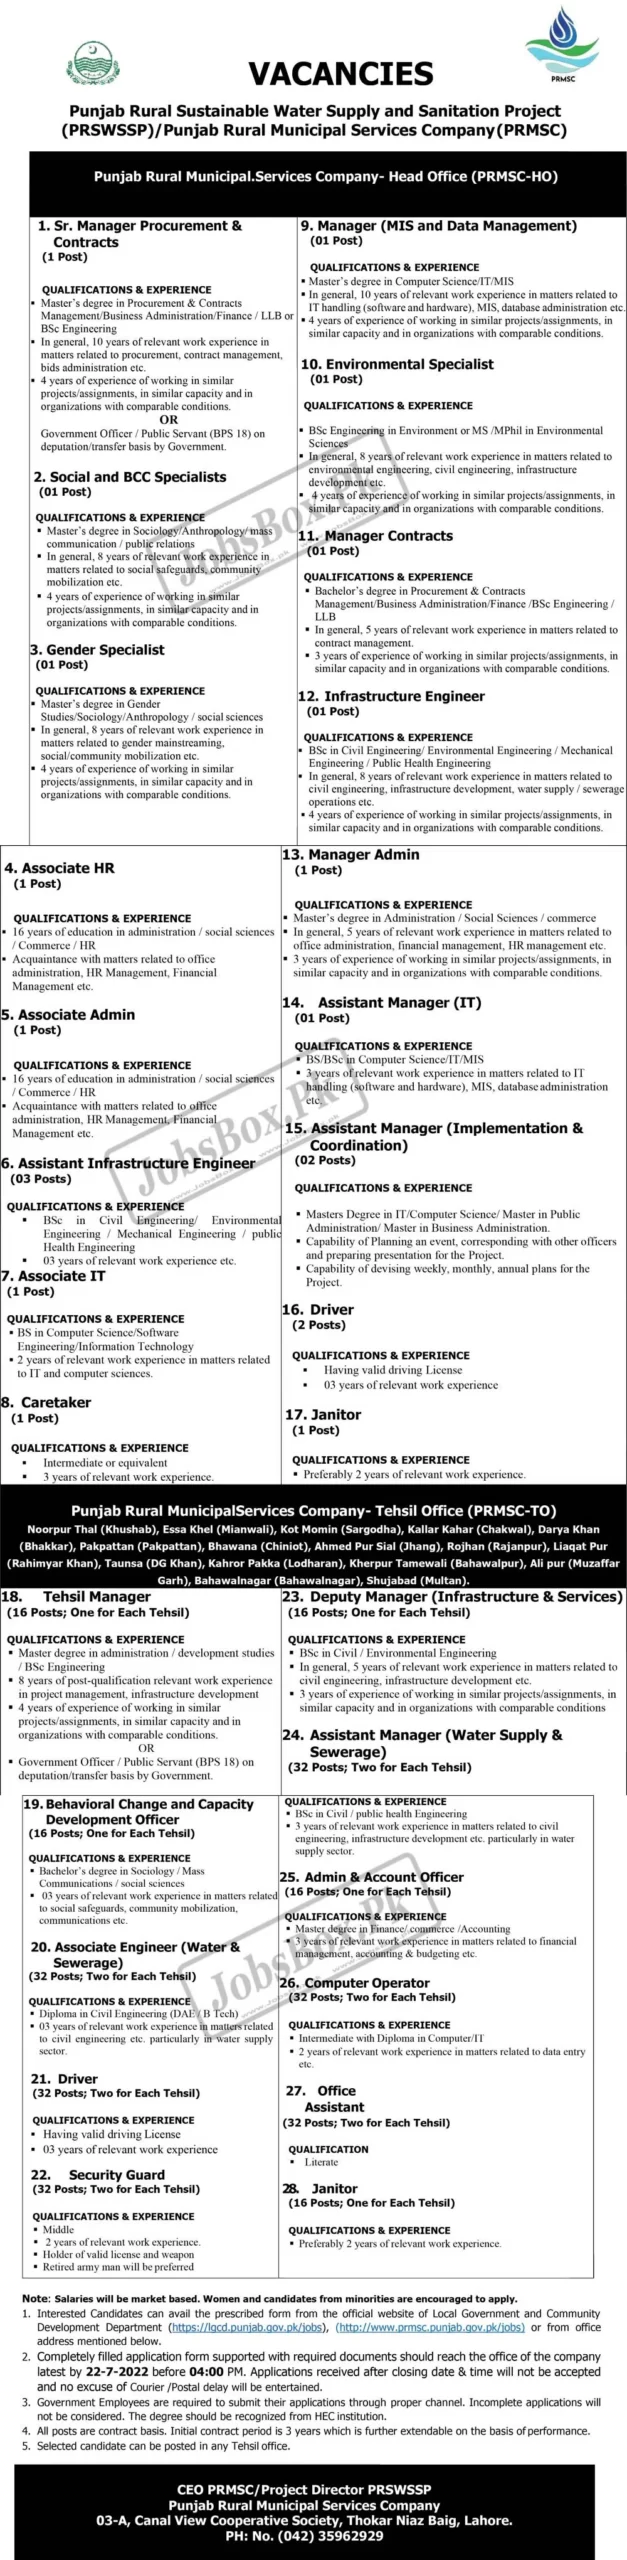 Punjab Rural Municipal Services Company PRMSC Vacancies 2022